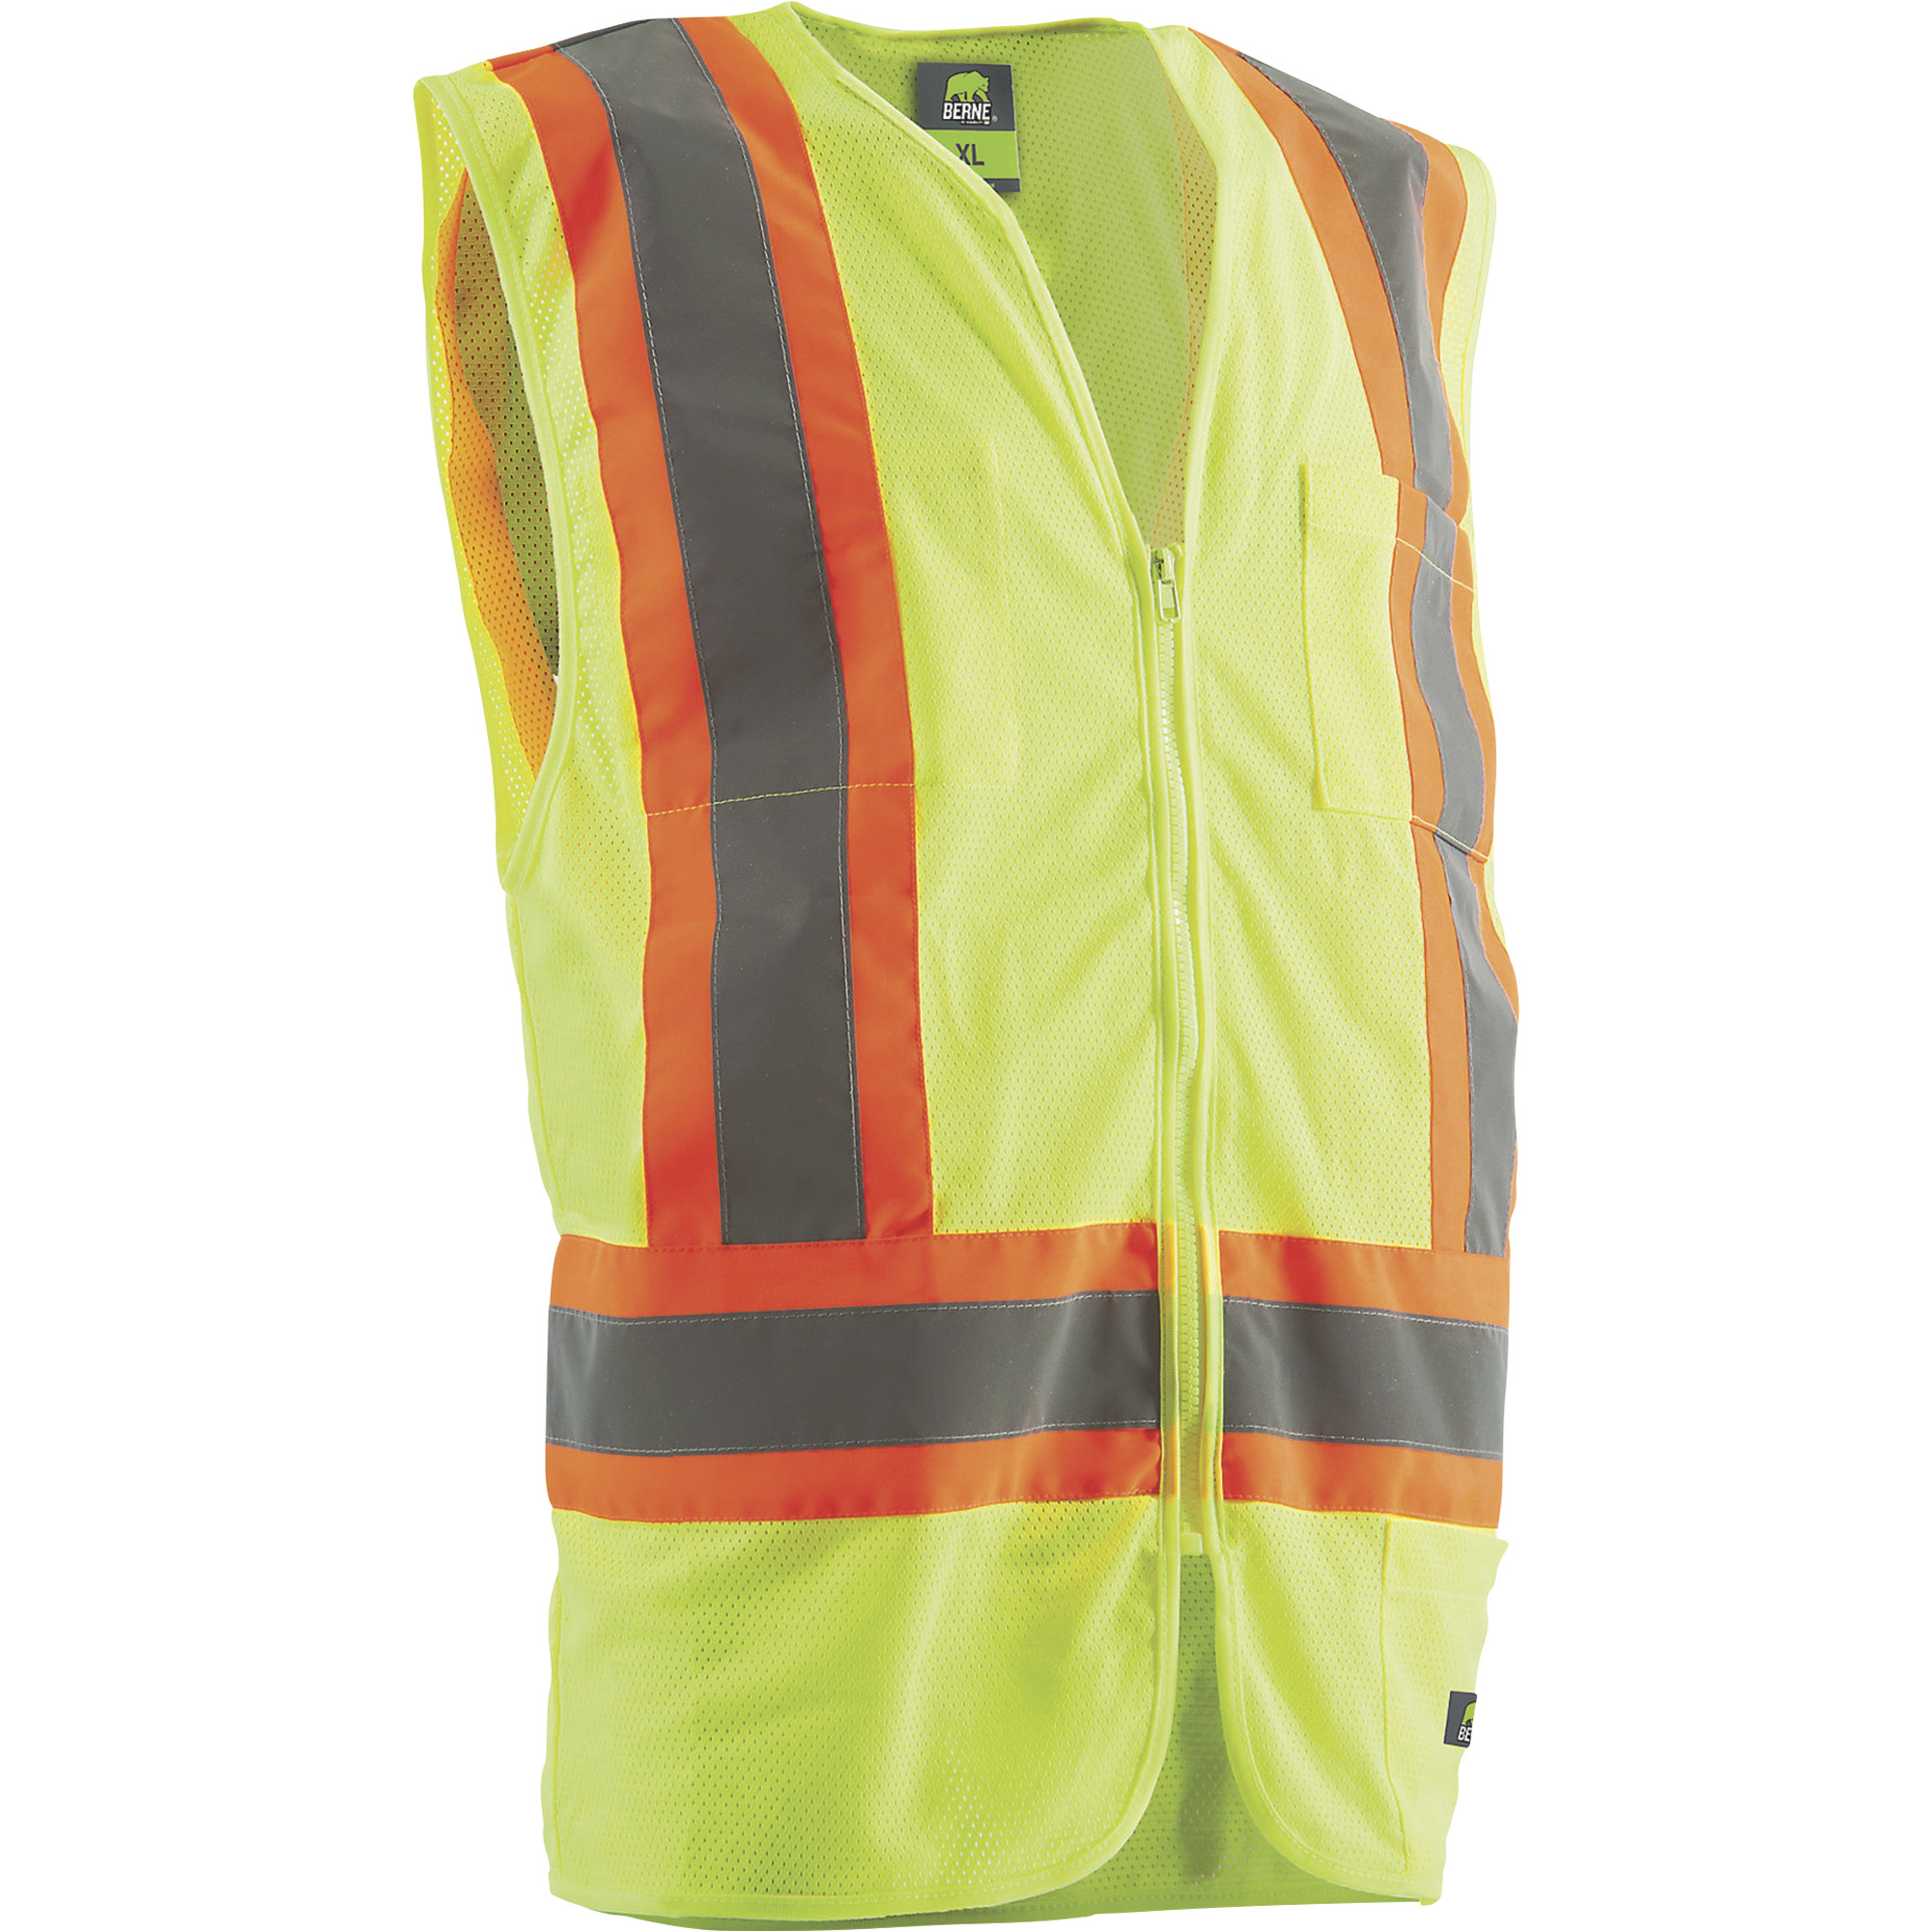 Berne Men's Class 2 High Visibility 2-Tone Safety Vest â Orange/Lime, 3XL/Big, Model HVV046YWBT